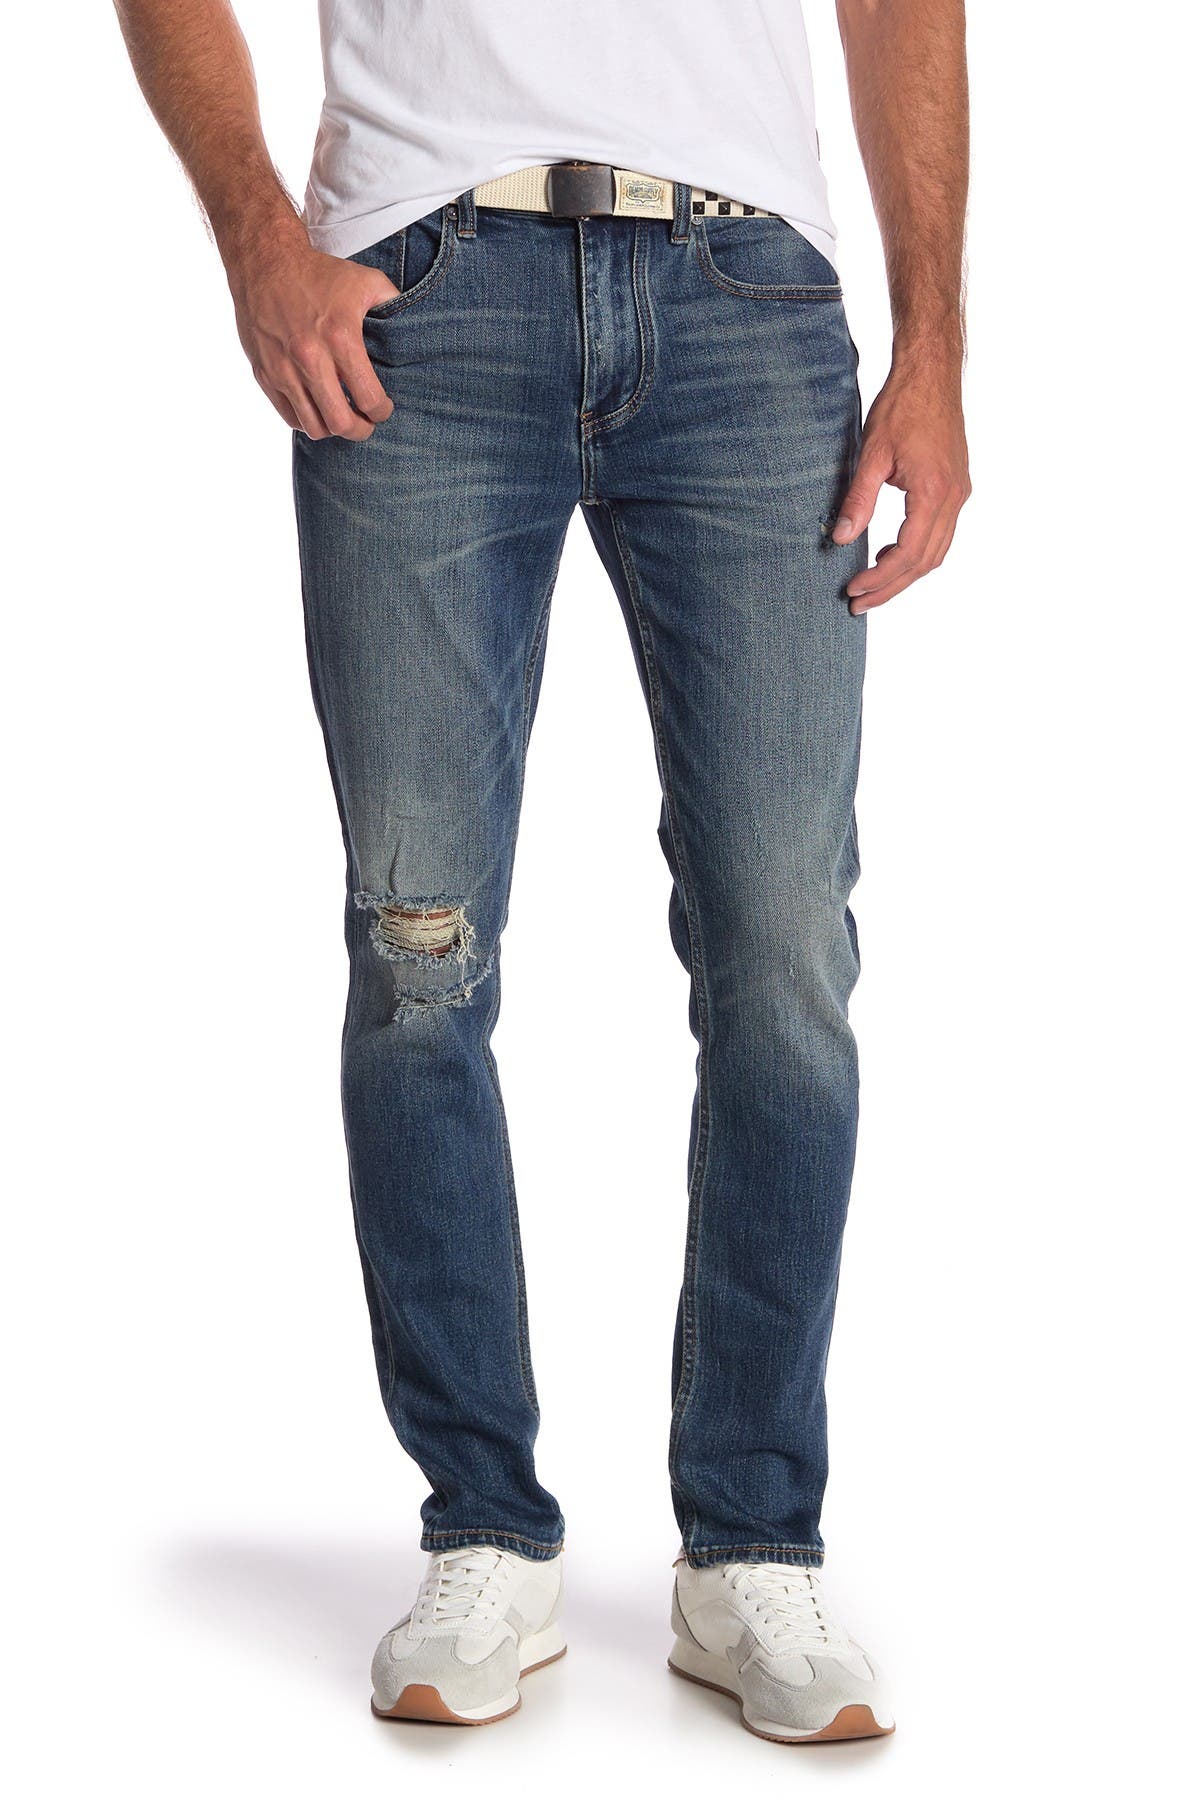 blanknyc wooster jeans